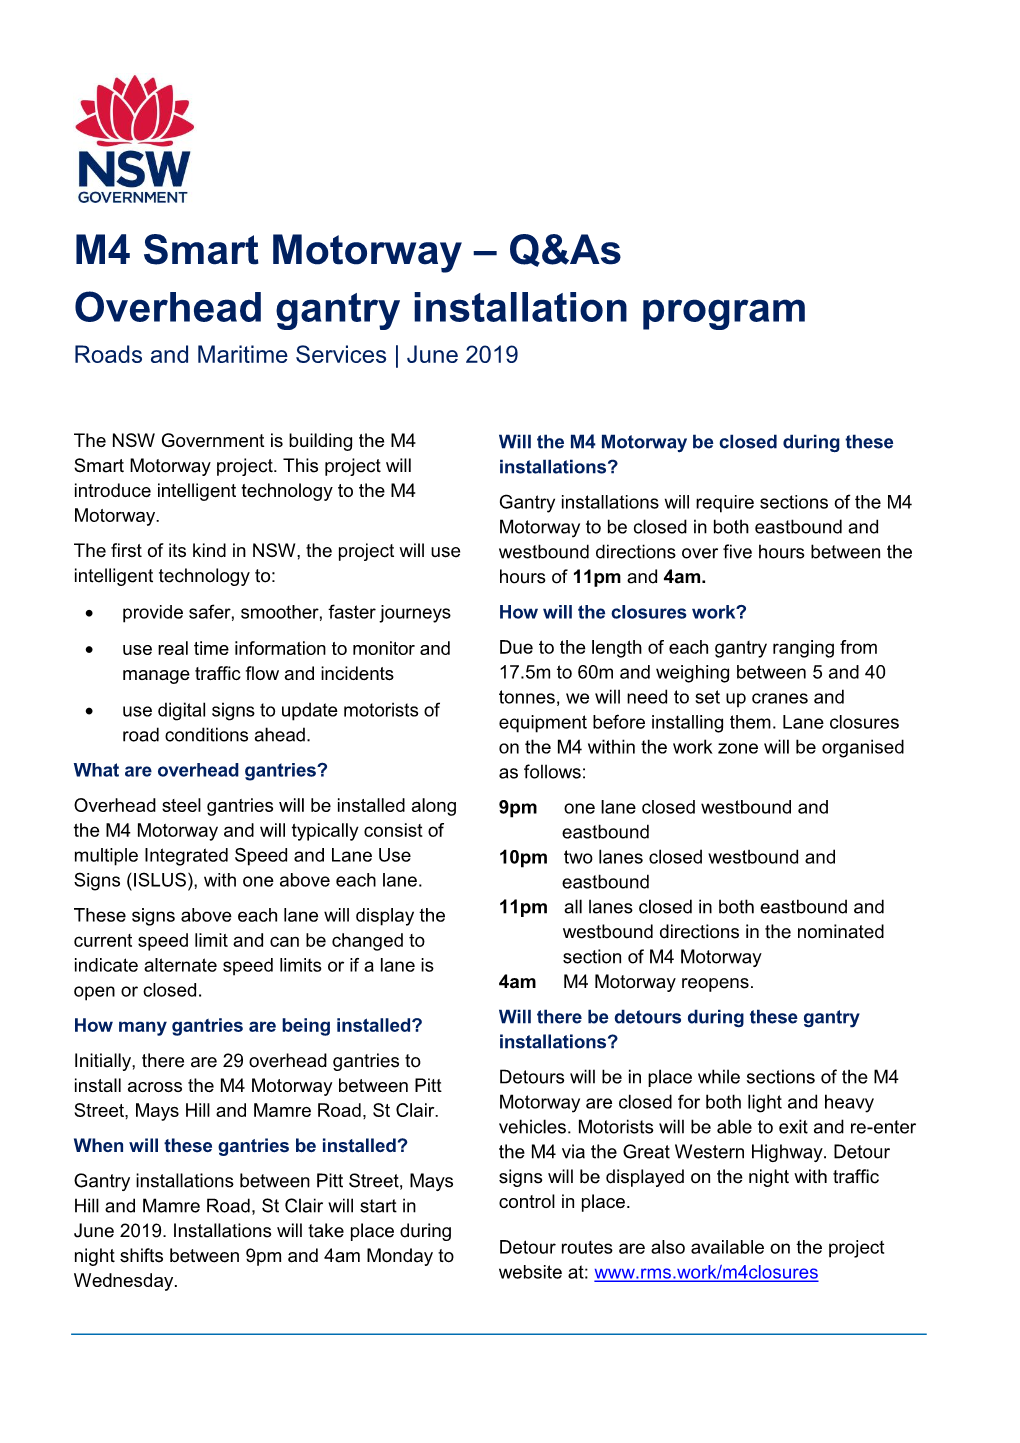 M4 Smart Motorway – Q&As Overhead Gantry Installation Program